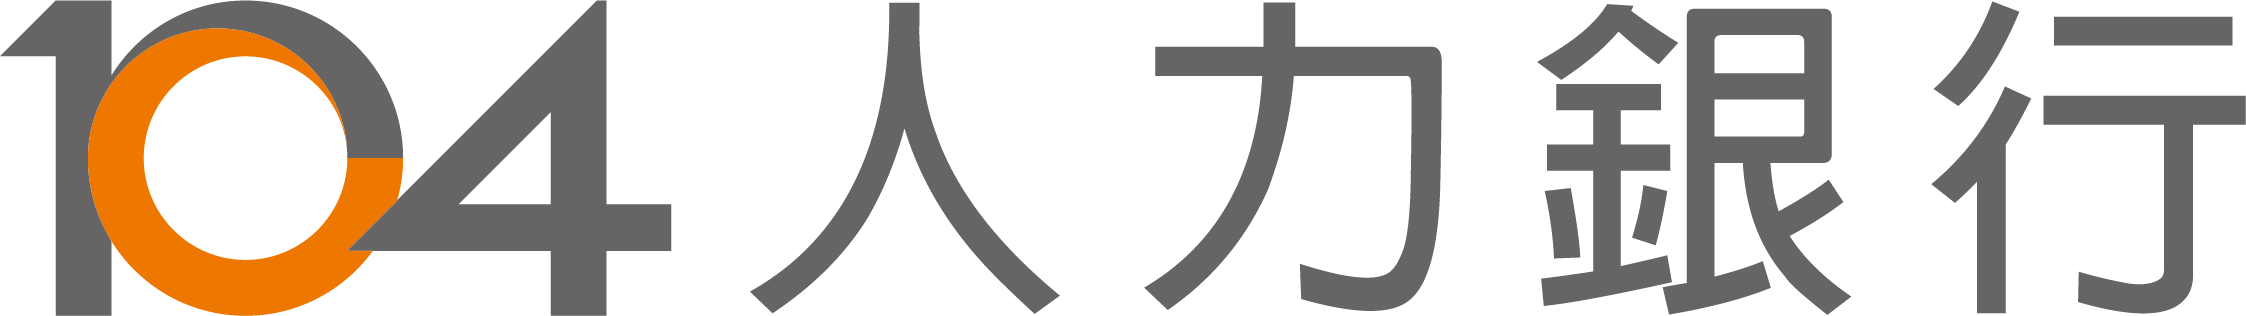 A-23一零四人力银行logo-CMYK_20200205090739